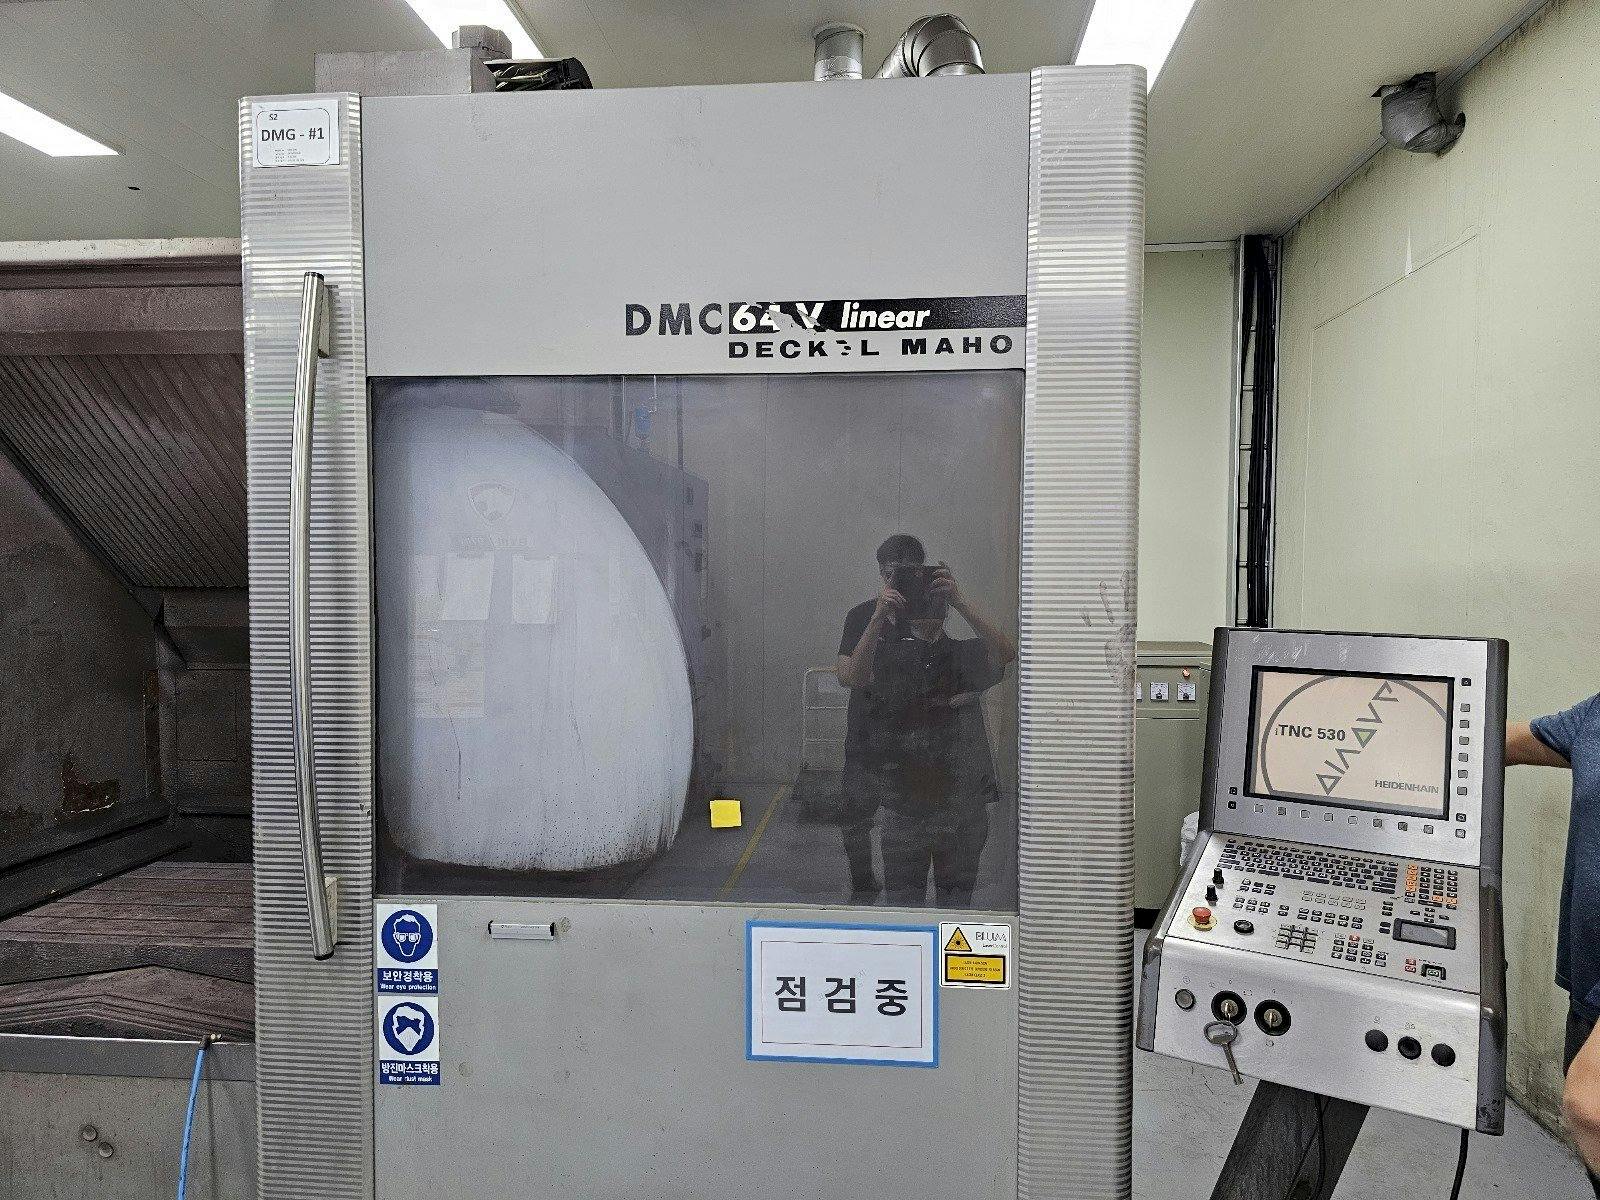 Prikaz  stroja DECKEL MAHO DMC 64V linear  sprijeda